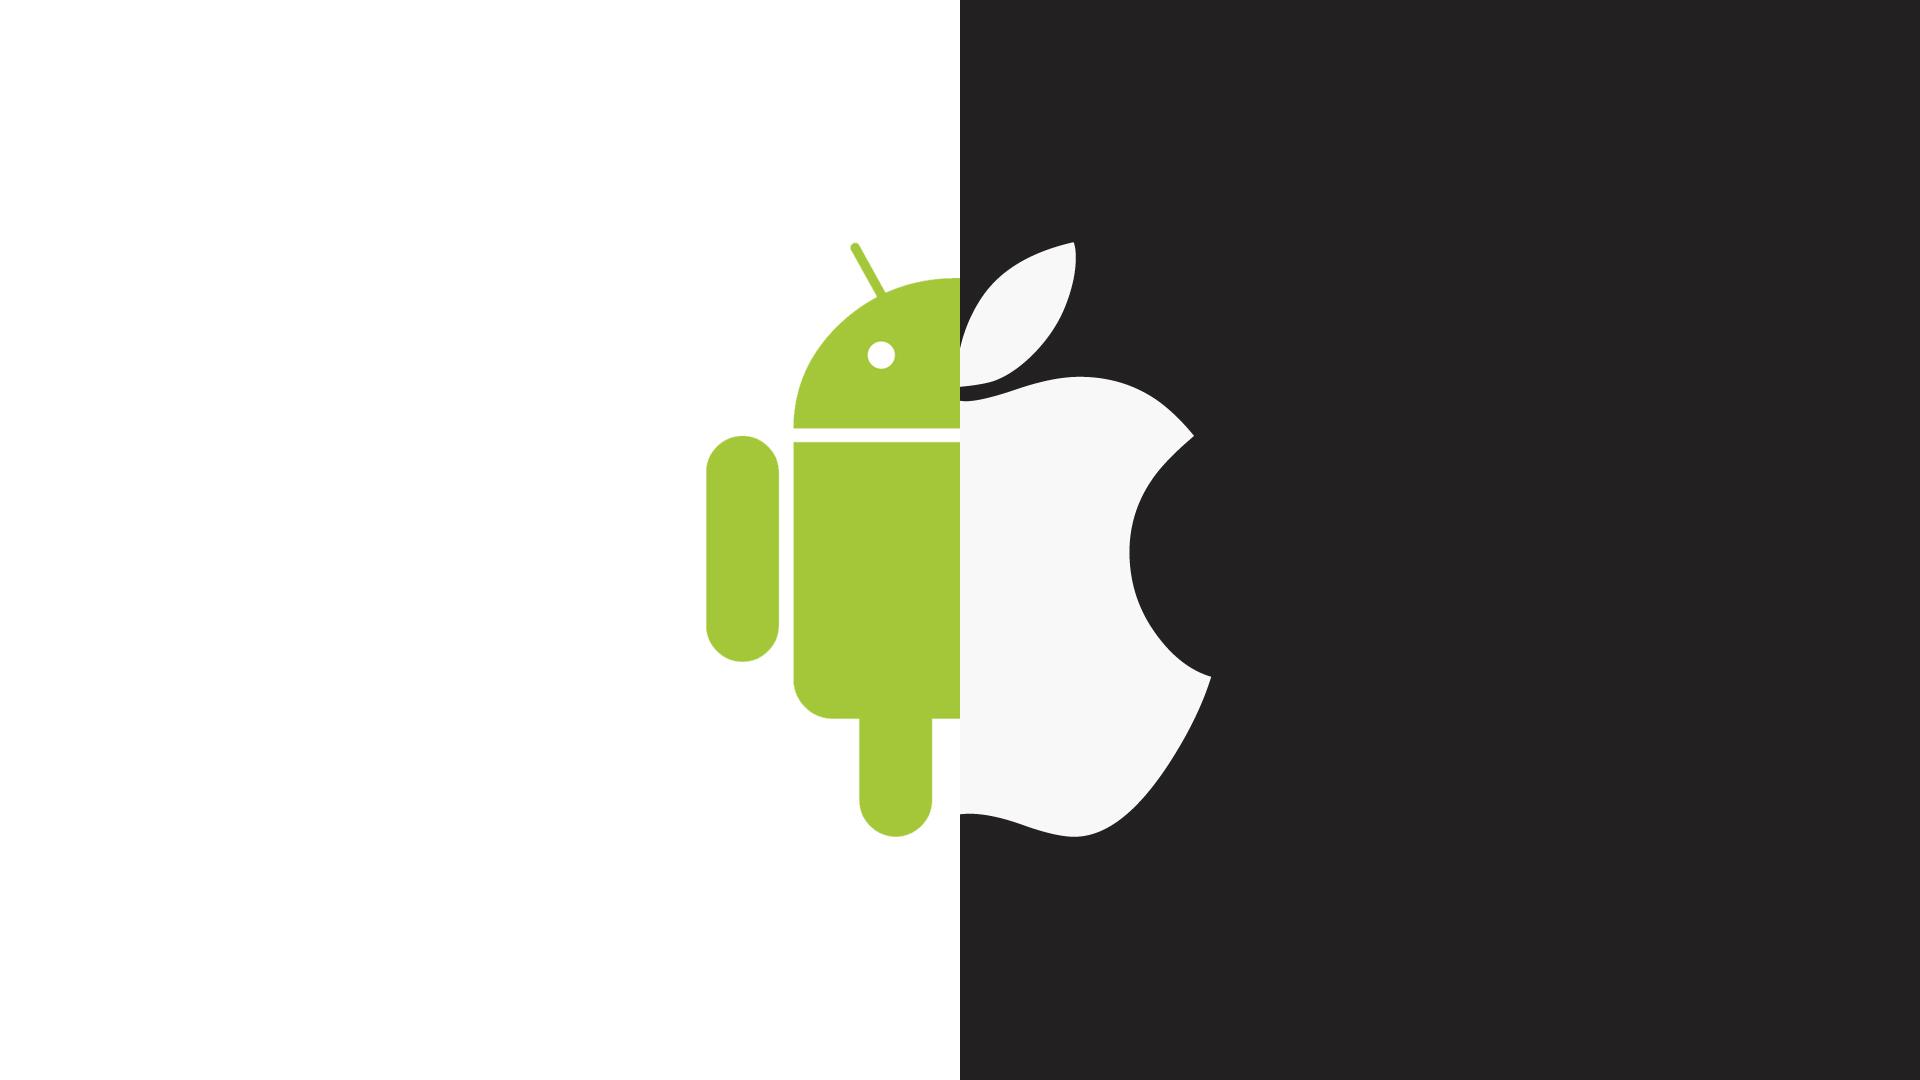 World Versus vs Apple iOS